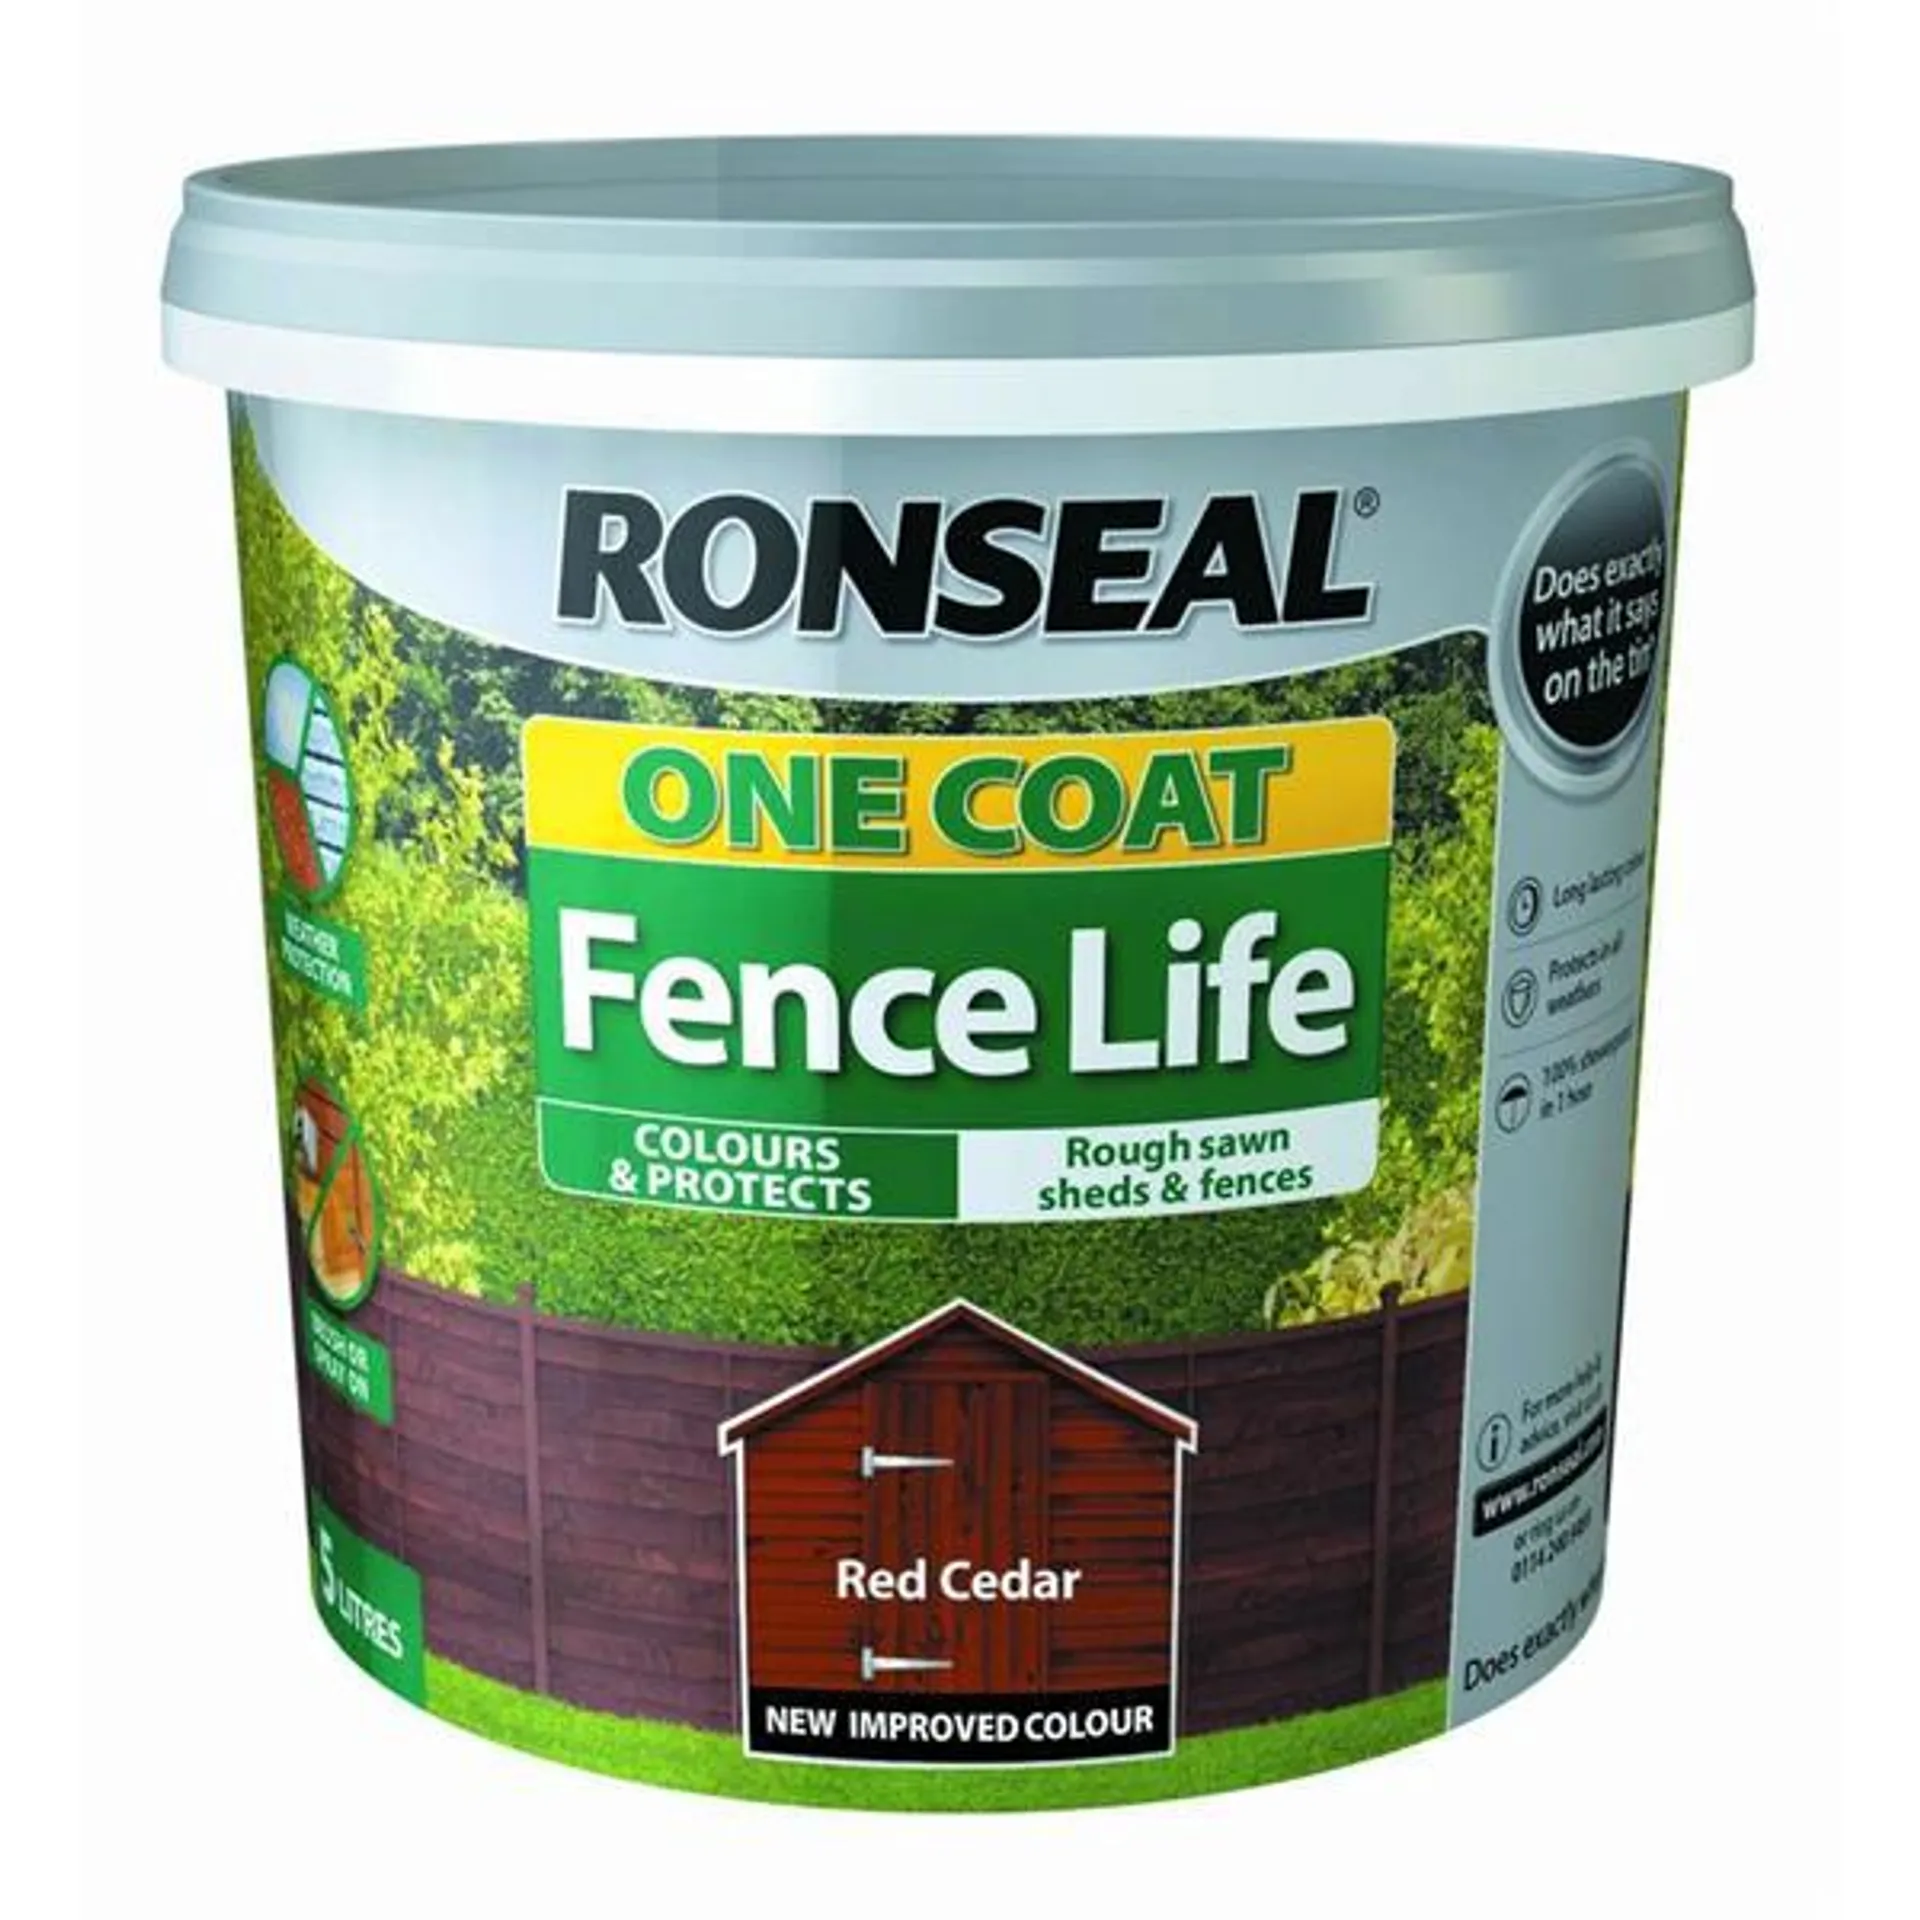 One Coat Fencelife Paint 5L - Red Cedar